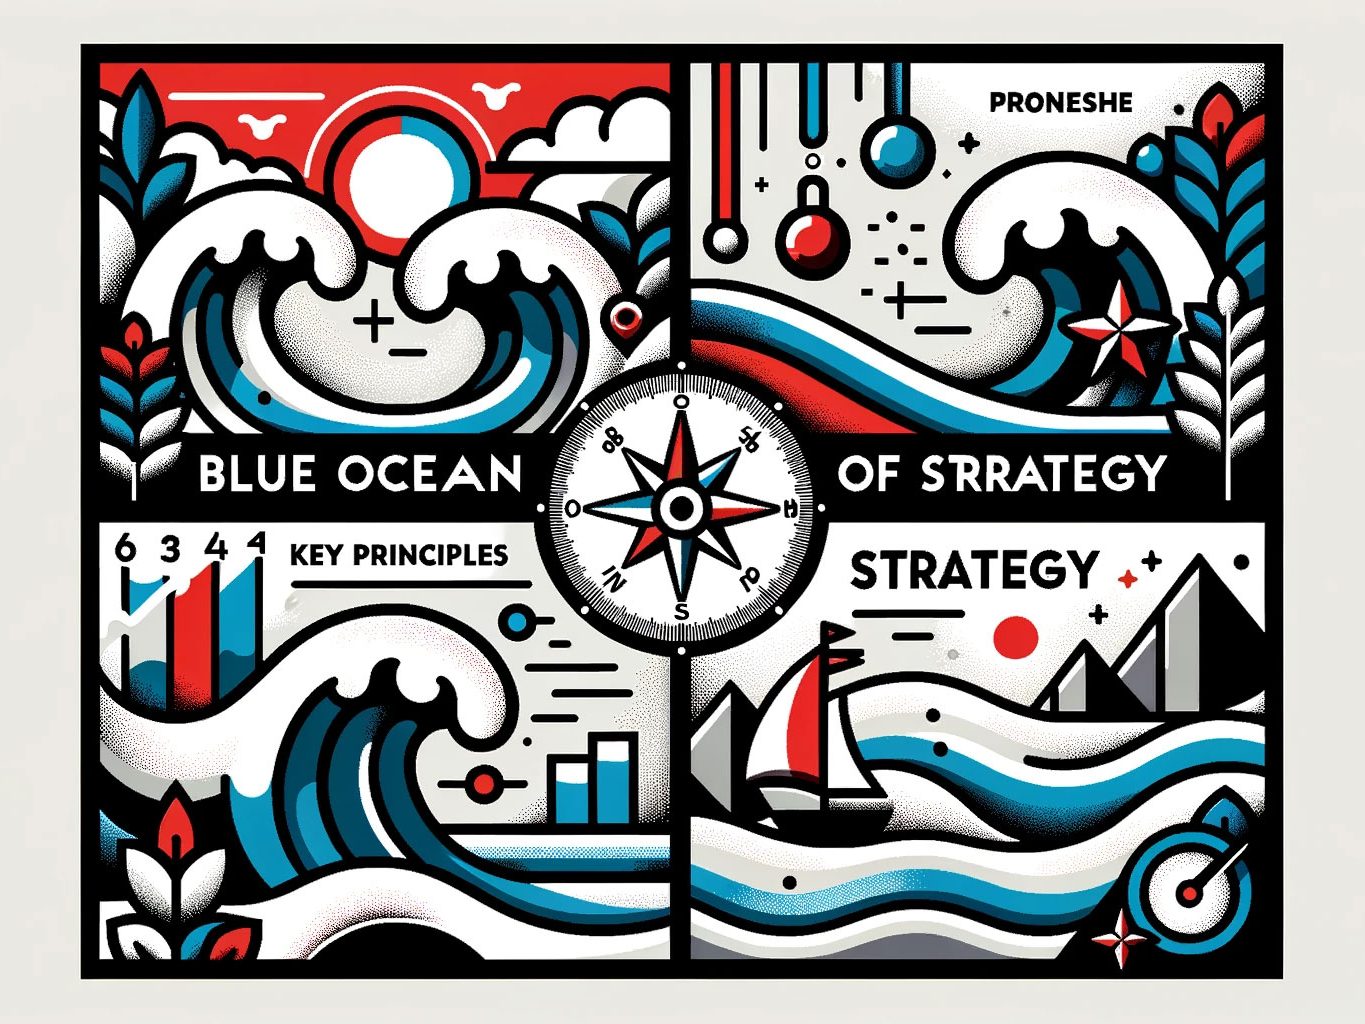 Key Principles of Blue Ocean Strategy